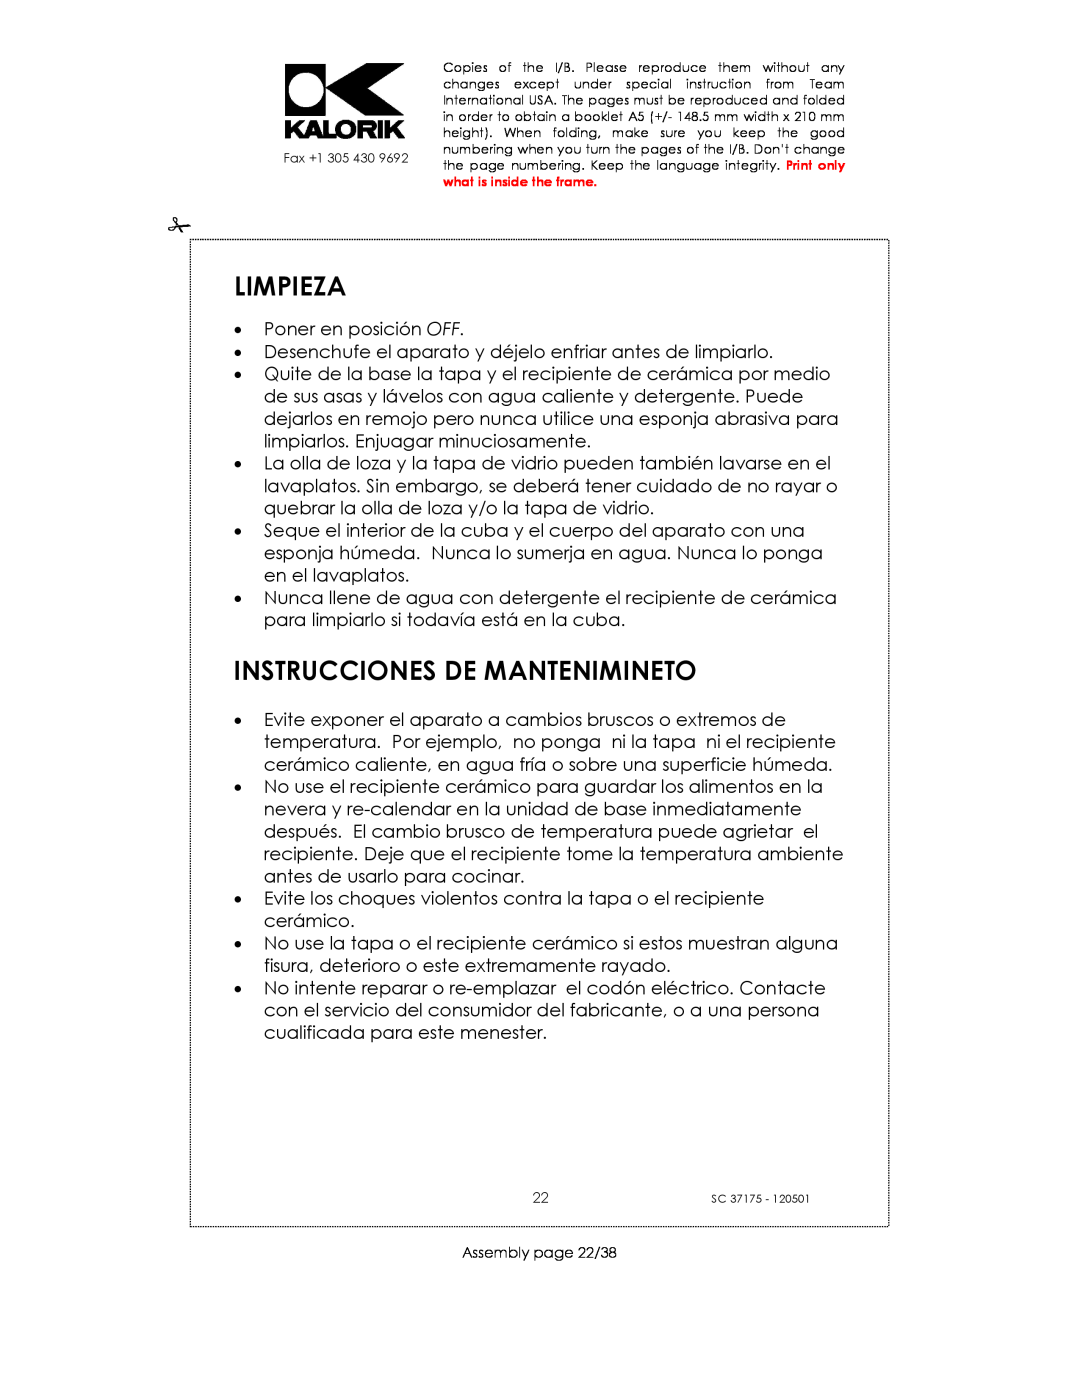 Kalorik SC 37175 manual Limpieza, Instrucciones De Mantenimineto 